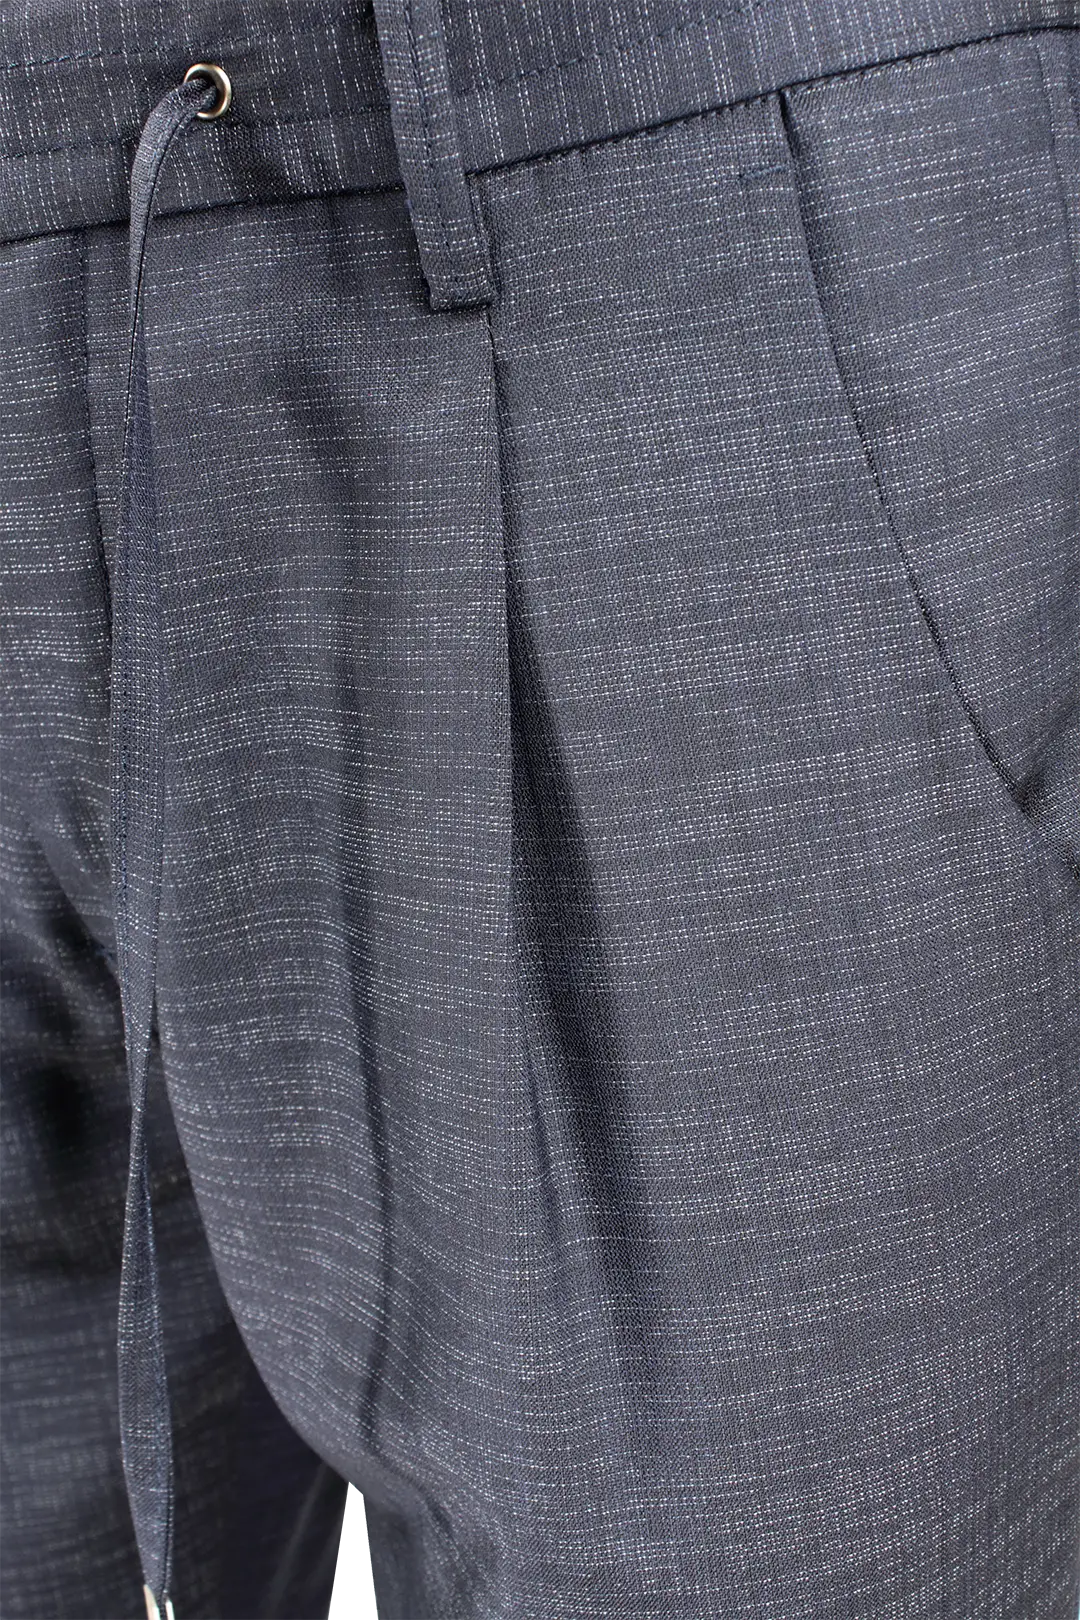 Pantalone con pince e coulisse in lana operata blu pince